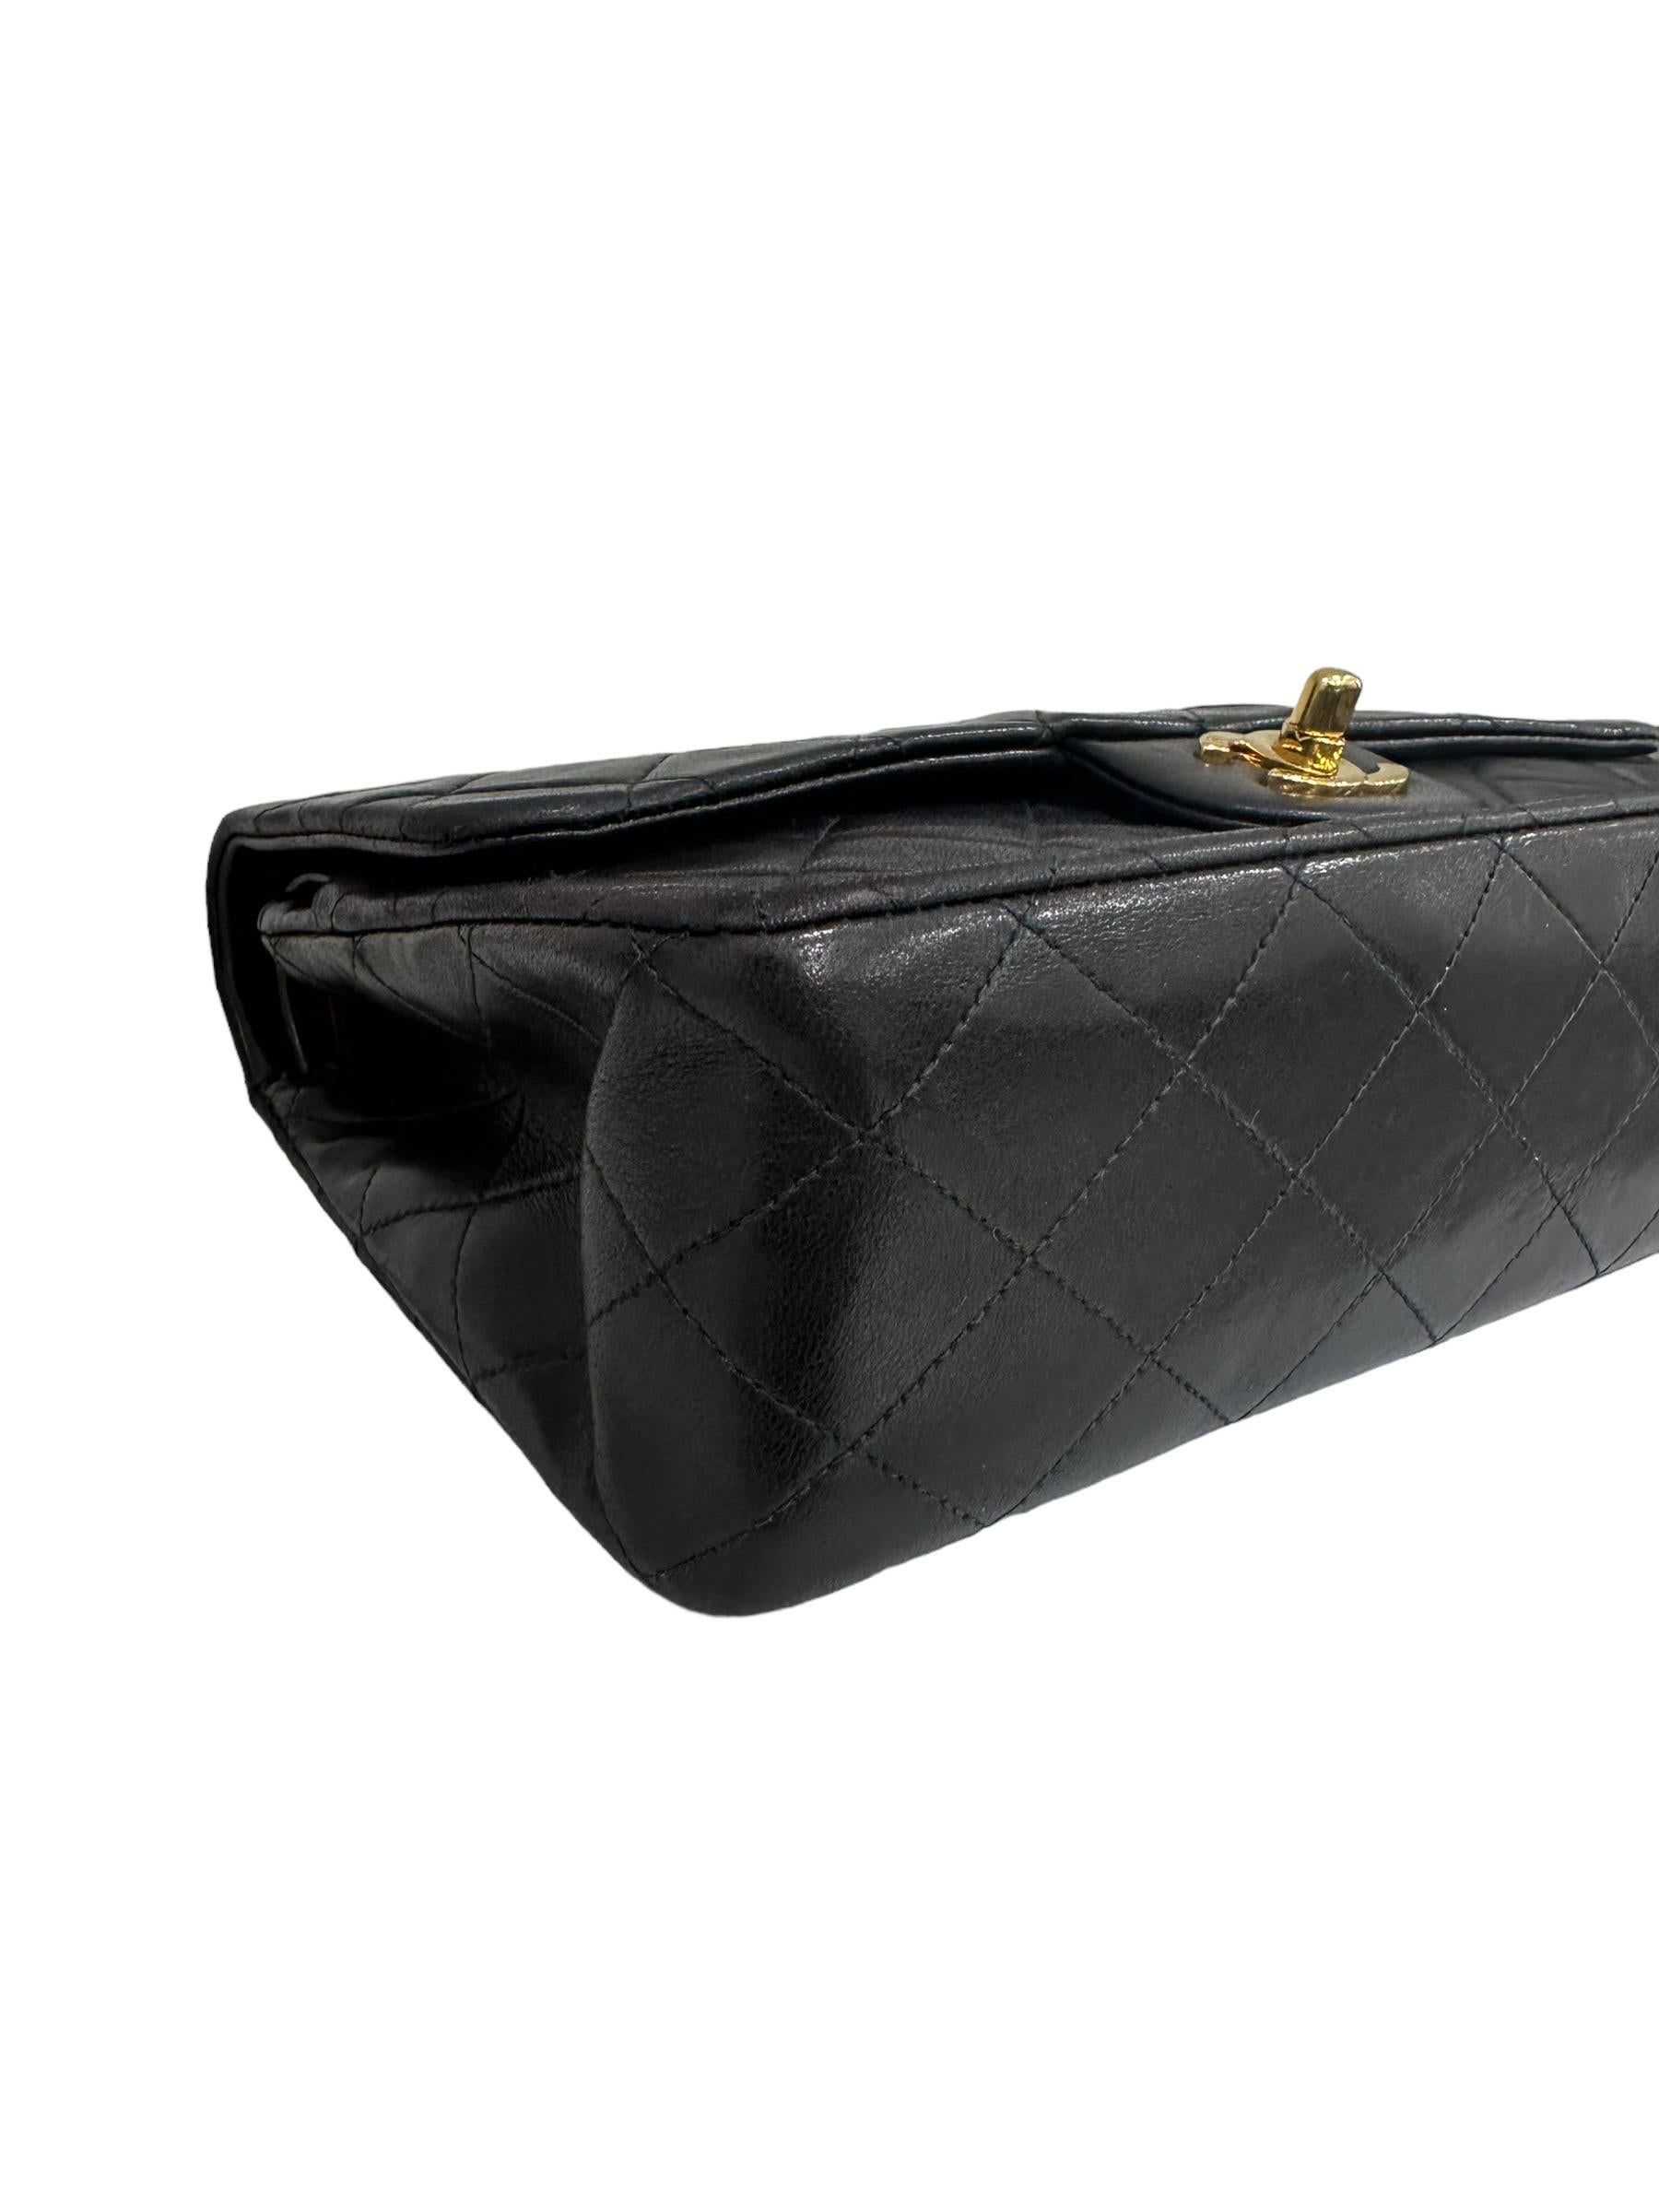 1996 Chanel Timeless Classic 2.55 Black Leather Top Shoulder Bag For Sale 7